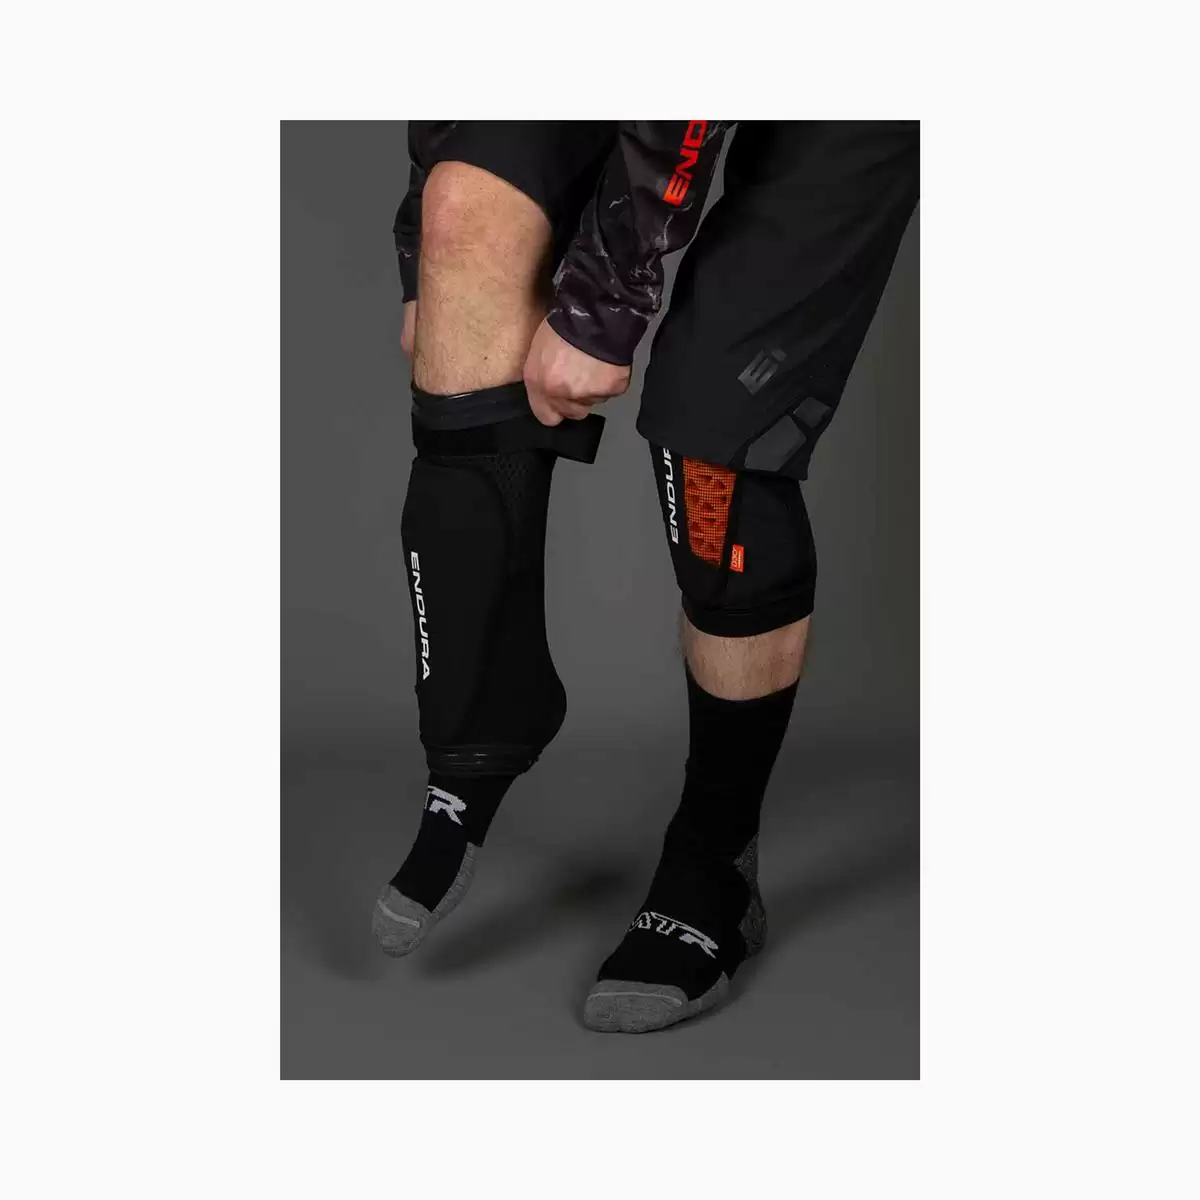 MT500 Lite Knee Pads size S/M black #1